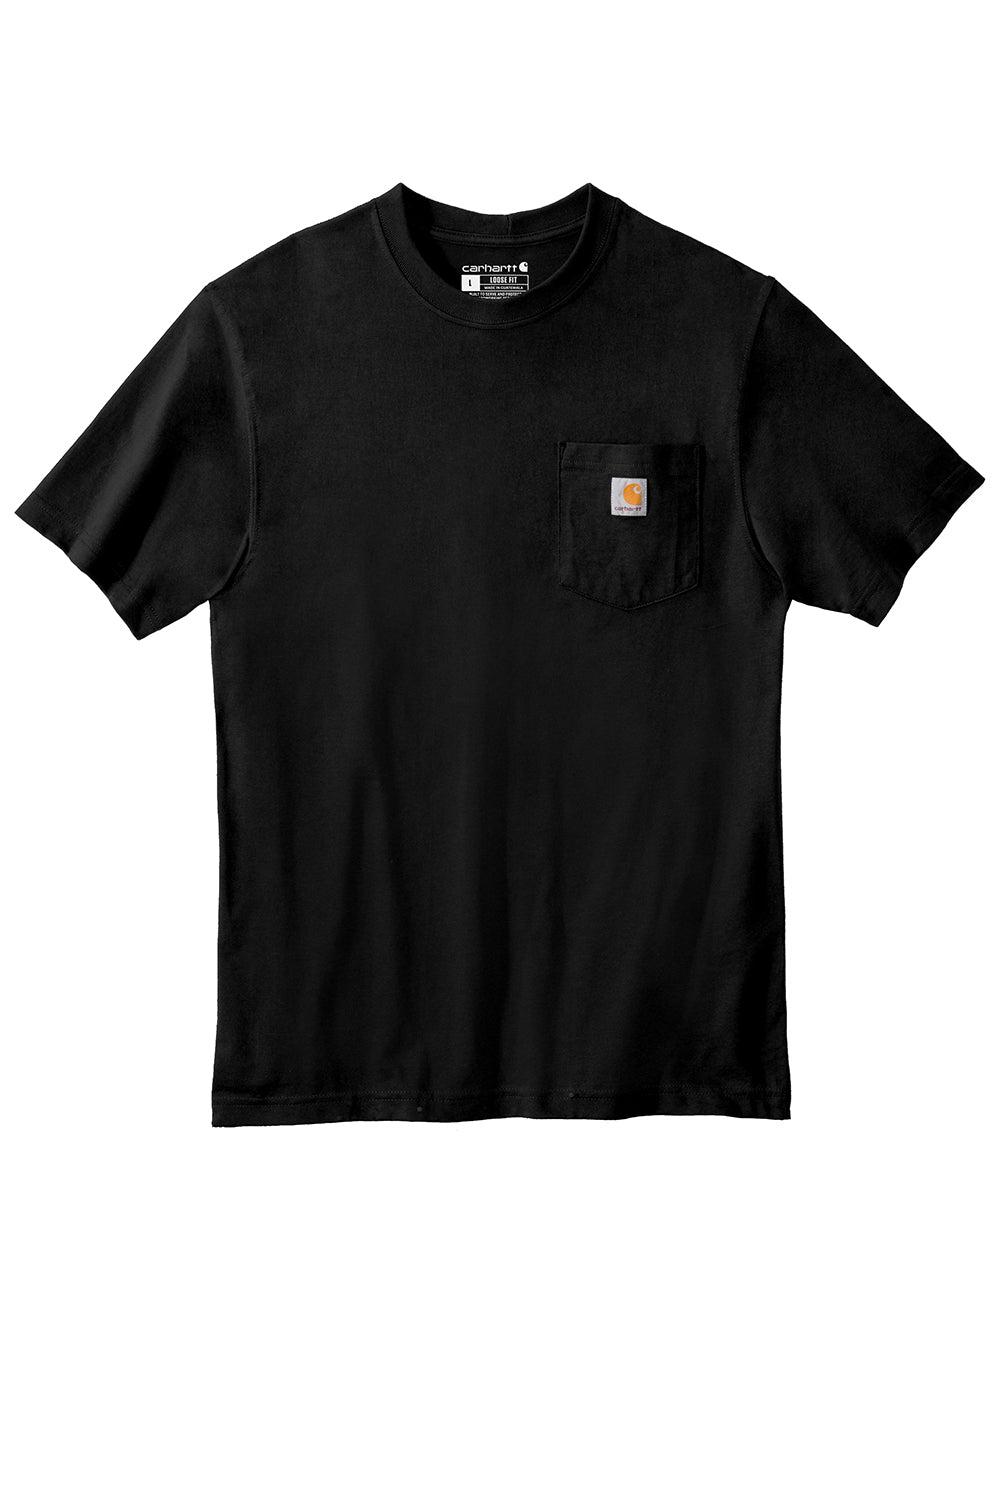 Carhartt CTK87/CTTK87 Mens Workwear Short Sleeve Crewneck T-Shirt w/ Pocket Black Flat Front